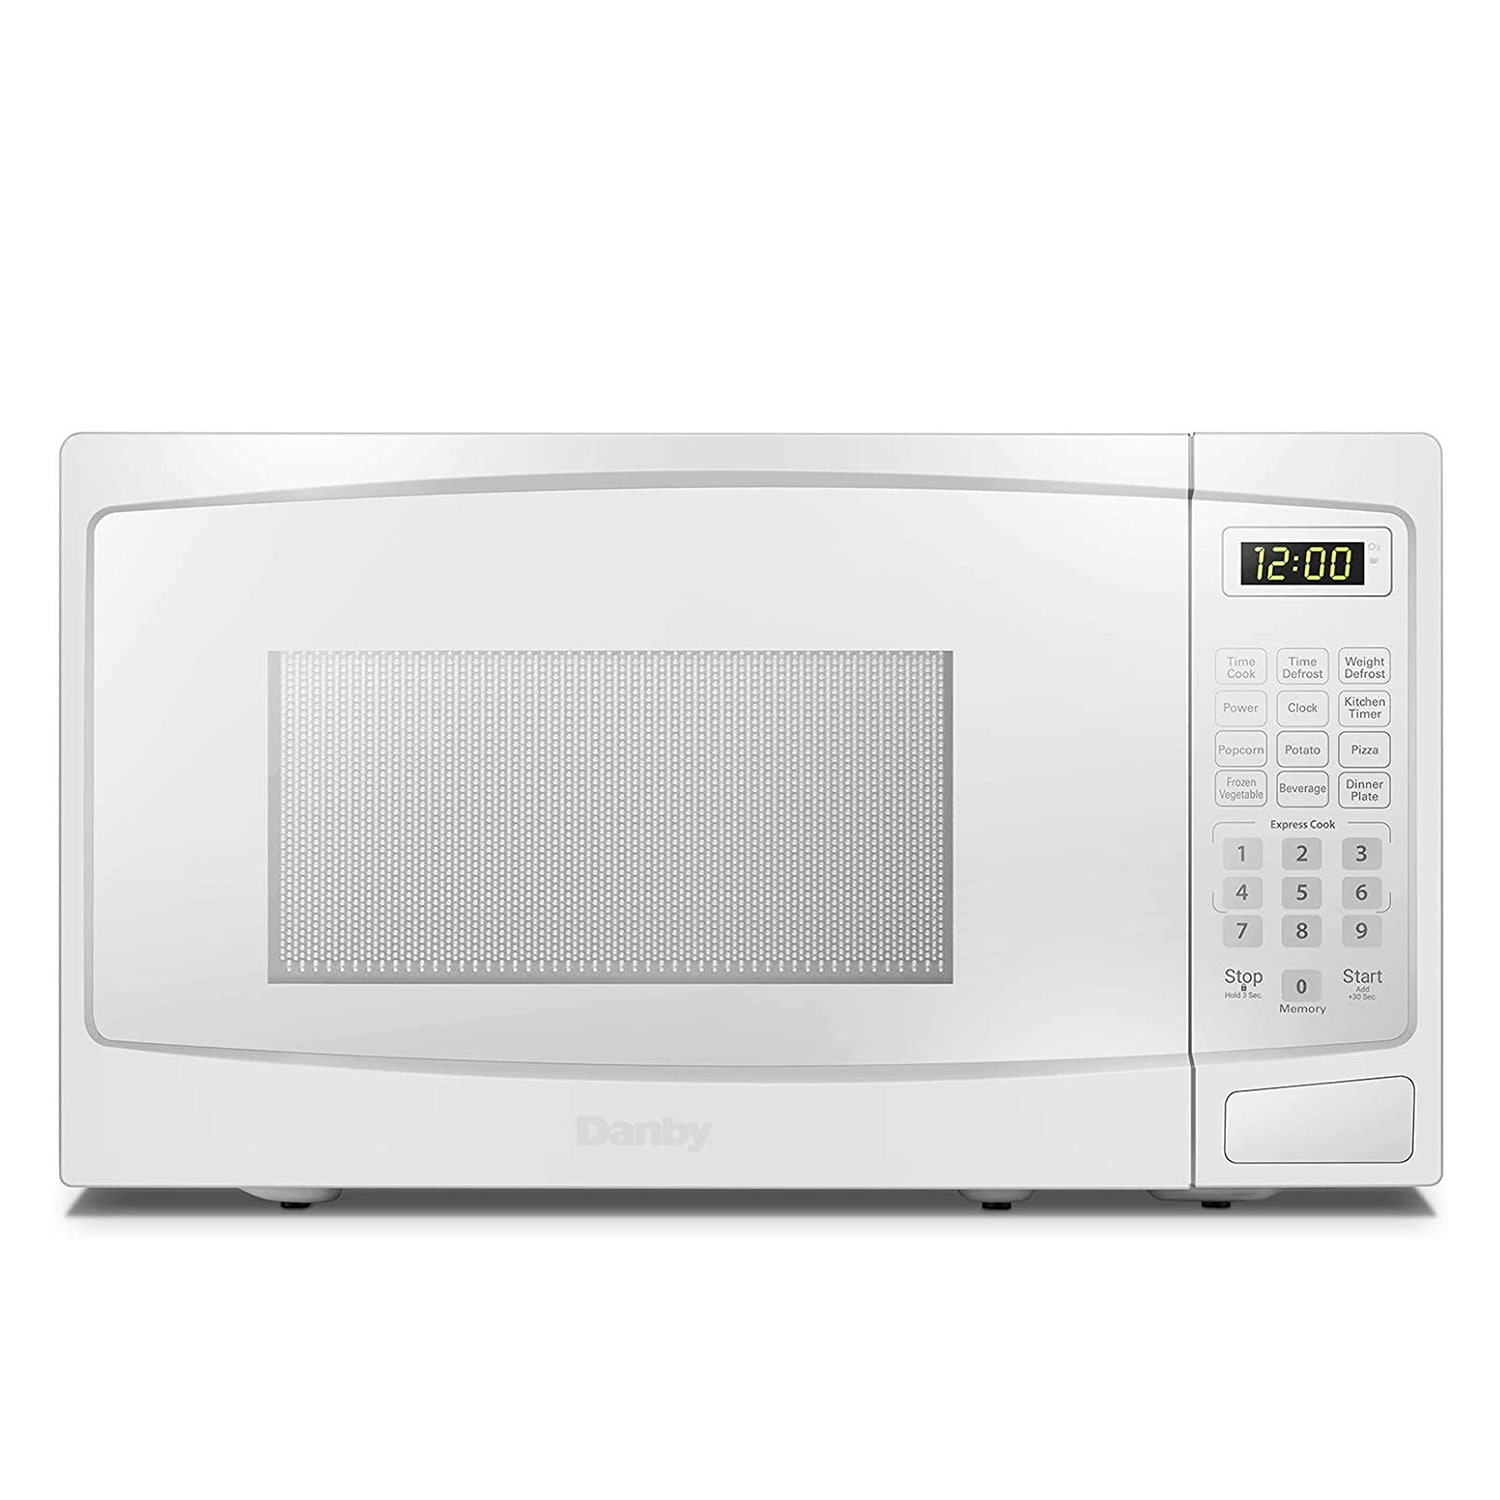 Danby 700W 0.7 Cubic Feet Convenient User-Friendly Countertop Microwave, White